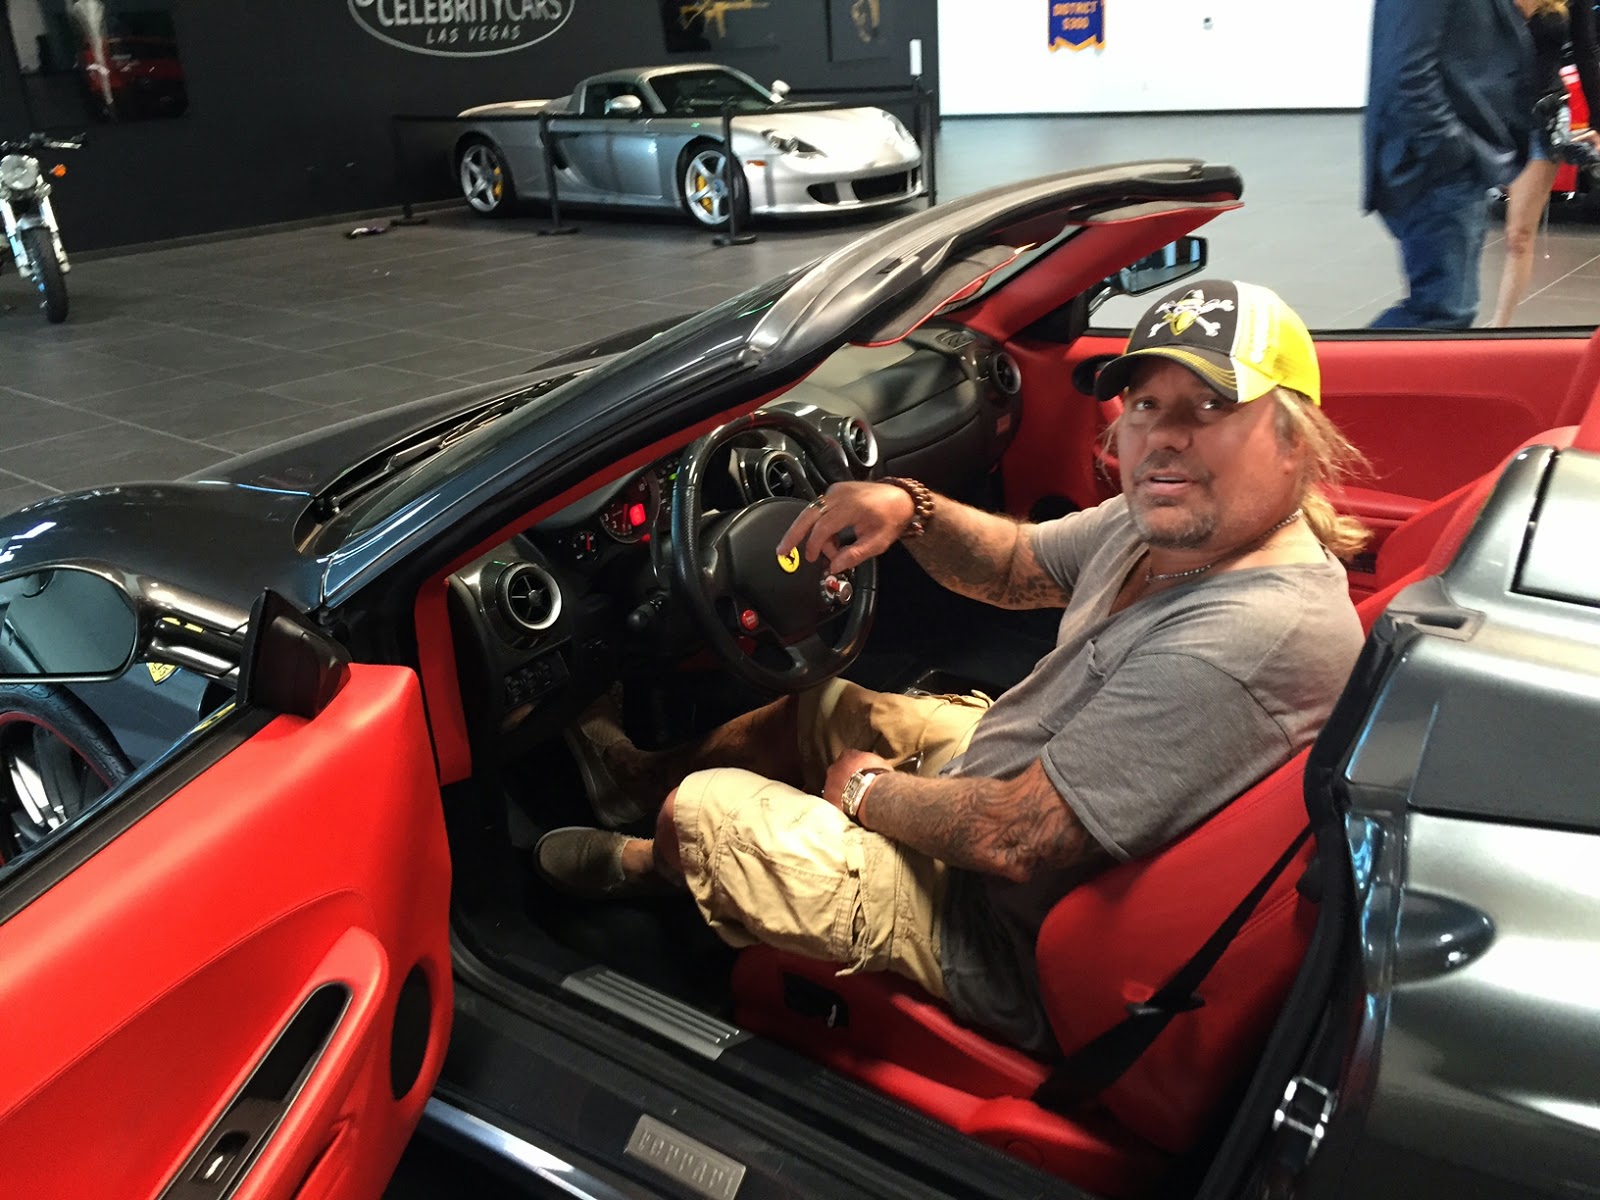 Vince Neil behind the wheel of a Ferrari.